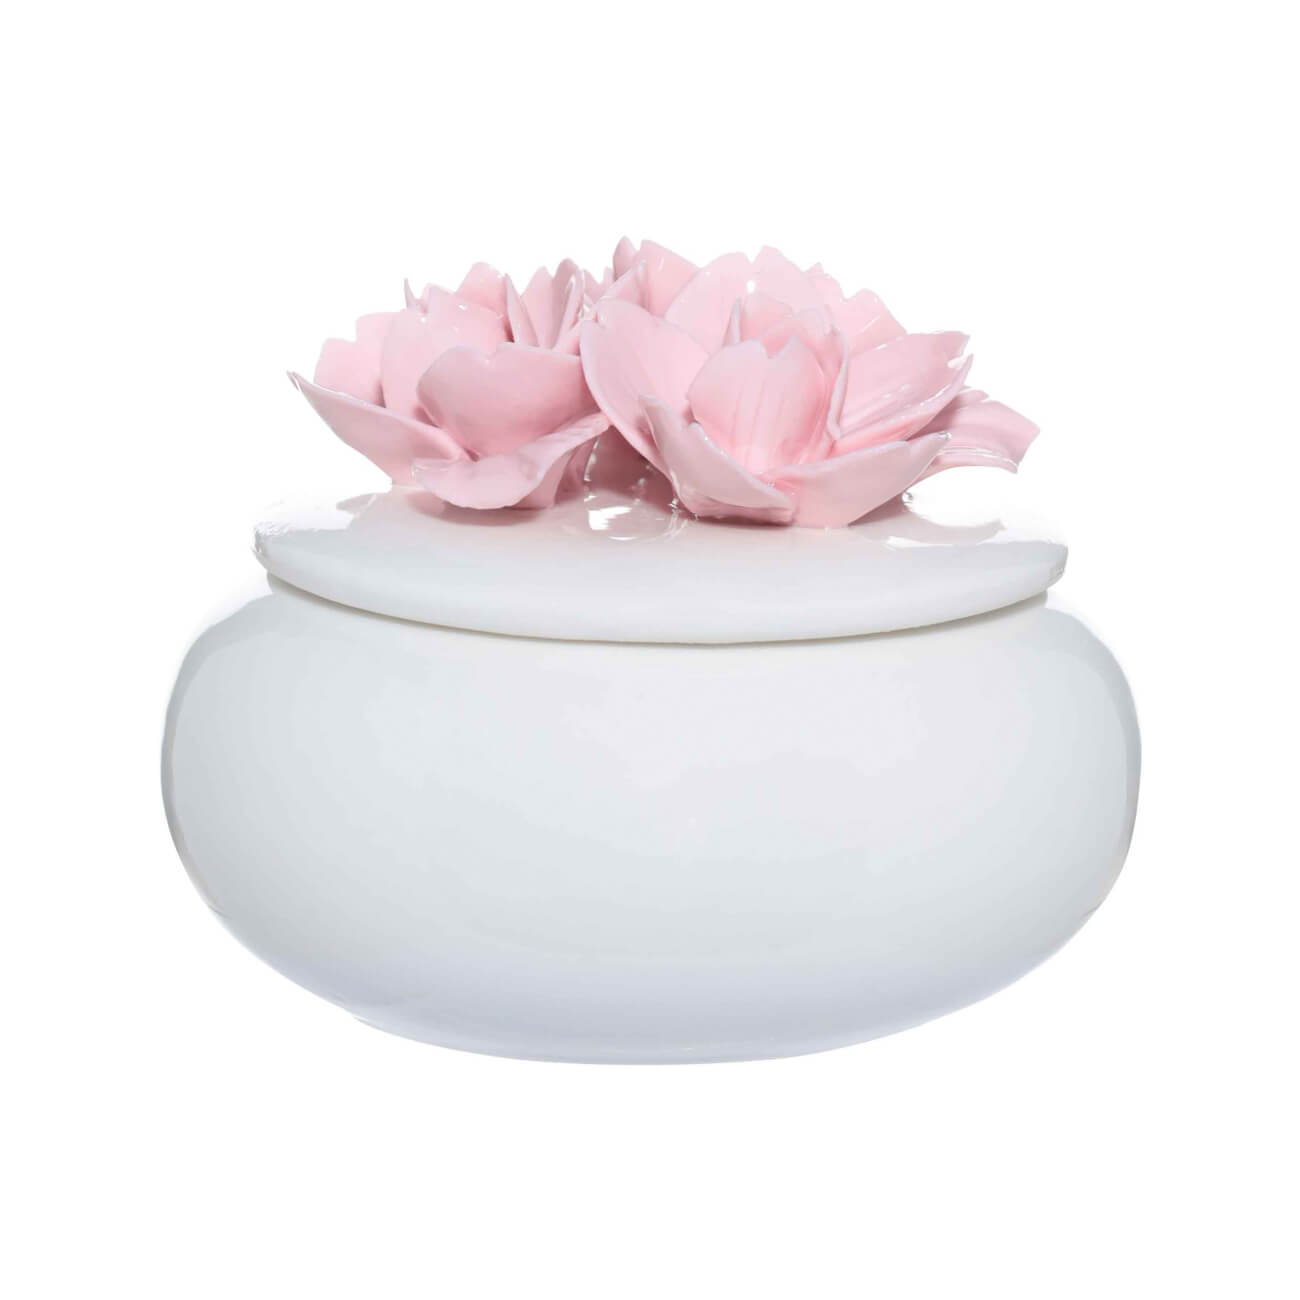 Шкатулка для украшений, 11х9 см, керамика, белая, Цветы, Magnolia шкатулка керамика зайчик с узорными ушками 6 4х6 4х12 1 см